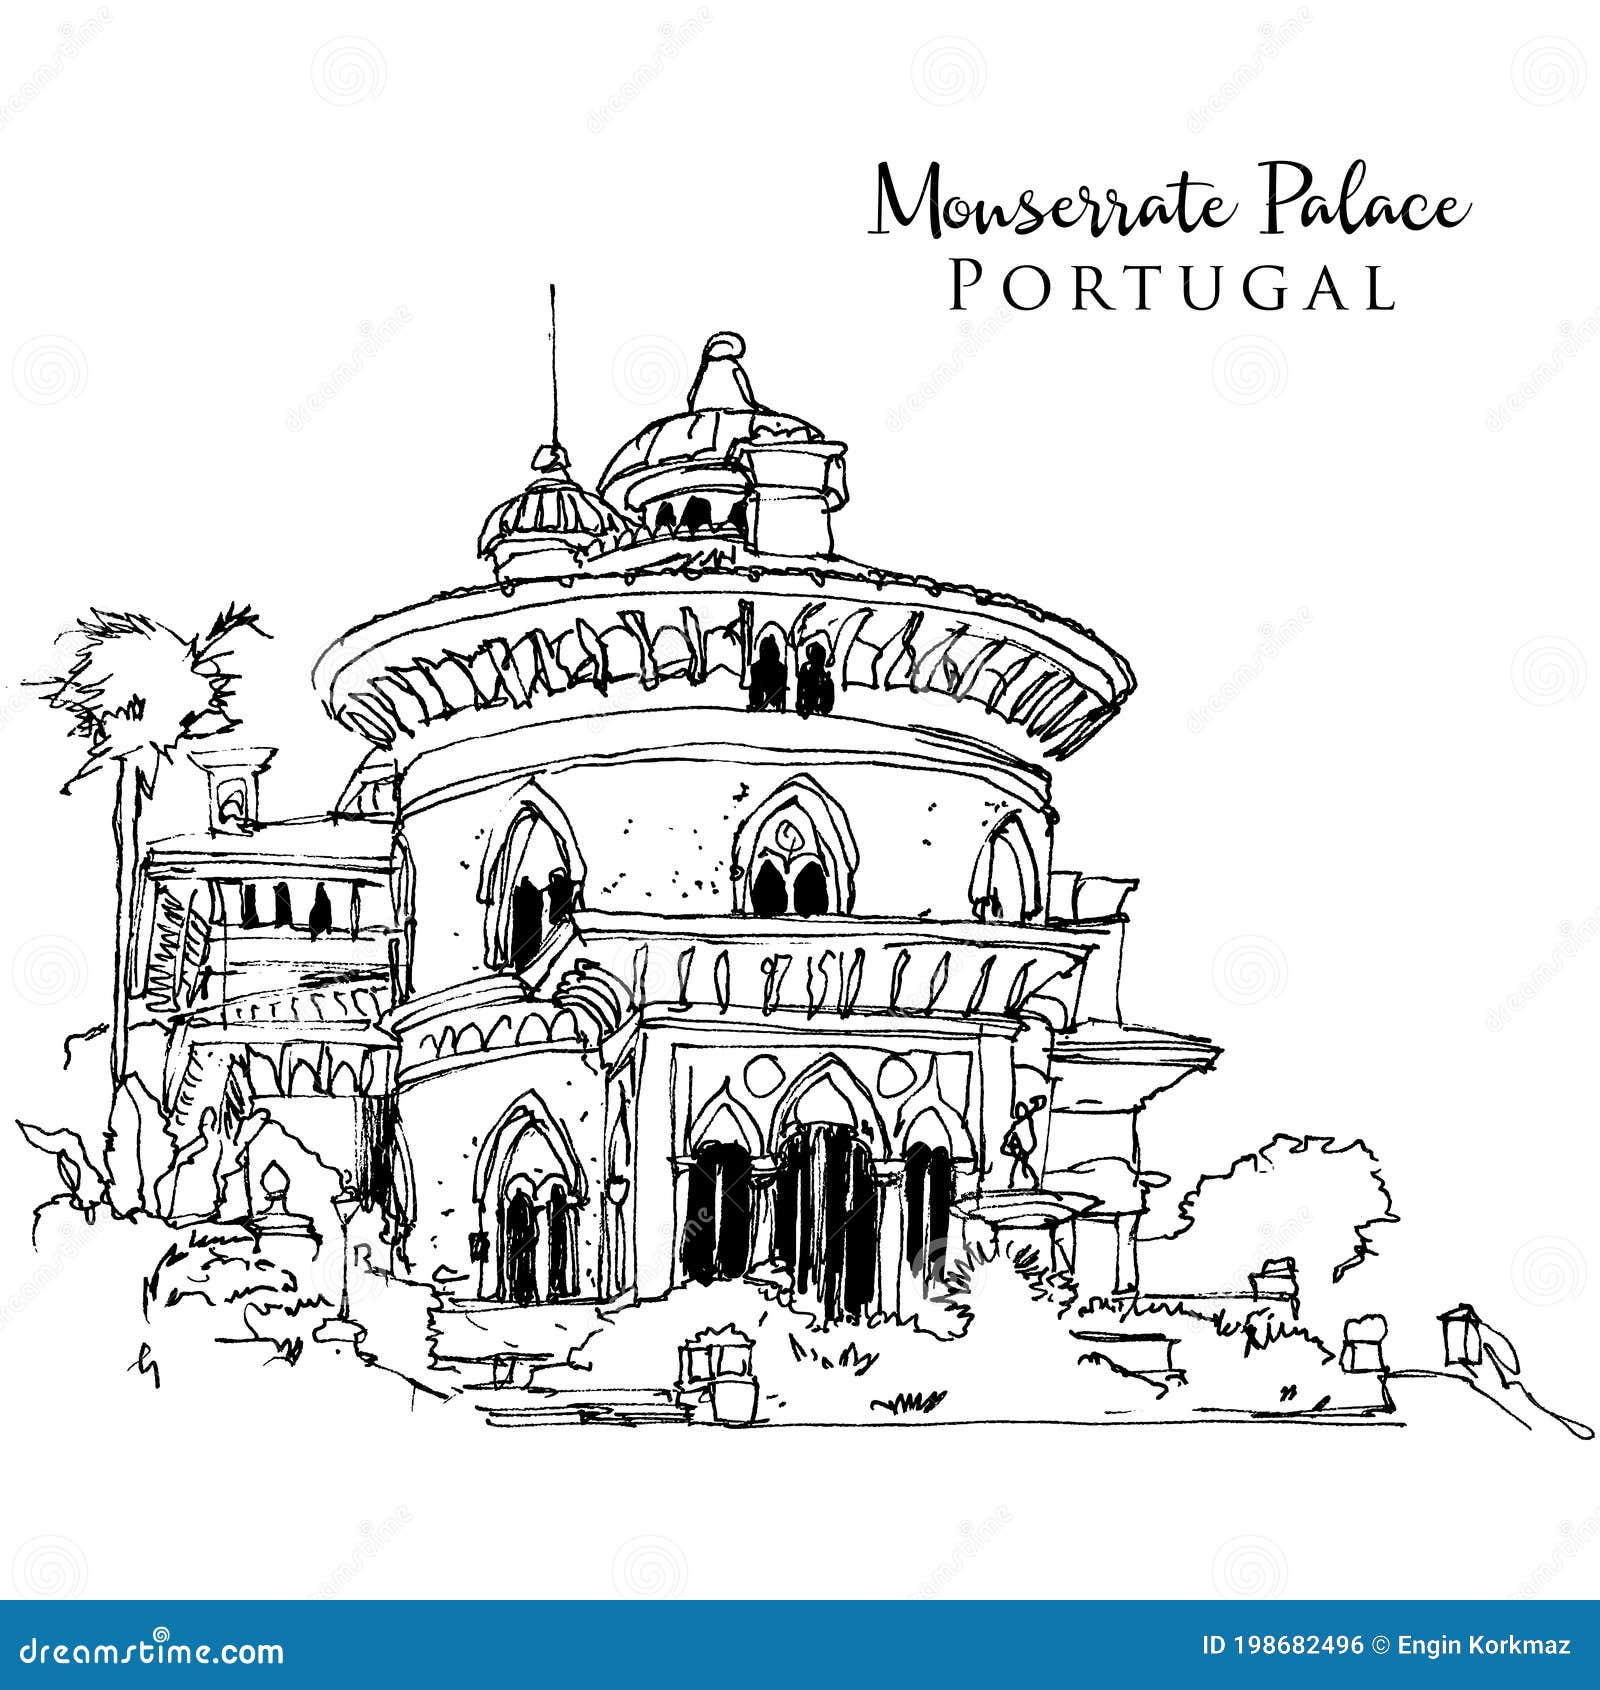 30+ Bangalore Palace Stock Photos, Pictures & Royalty-Free Images - iStock  | Mysore, Bengaluru, Mumbai